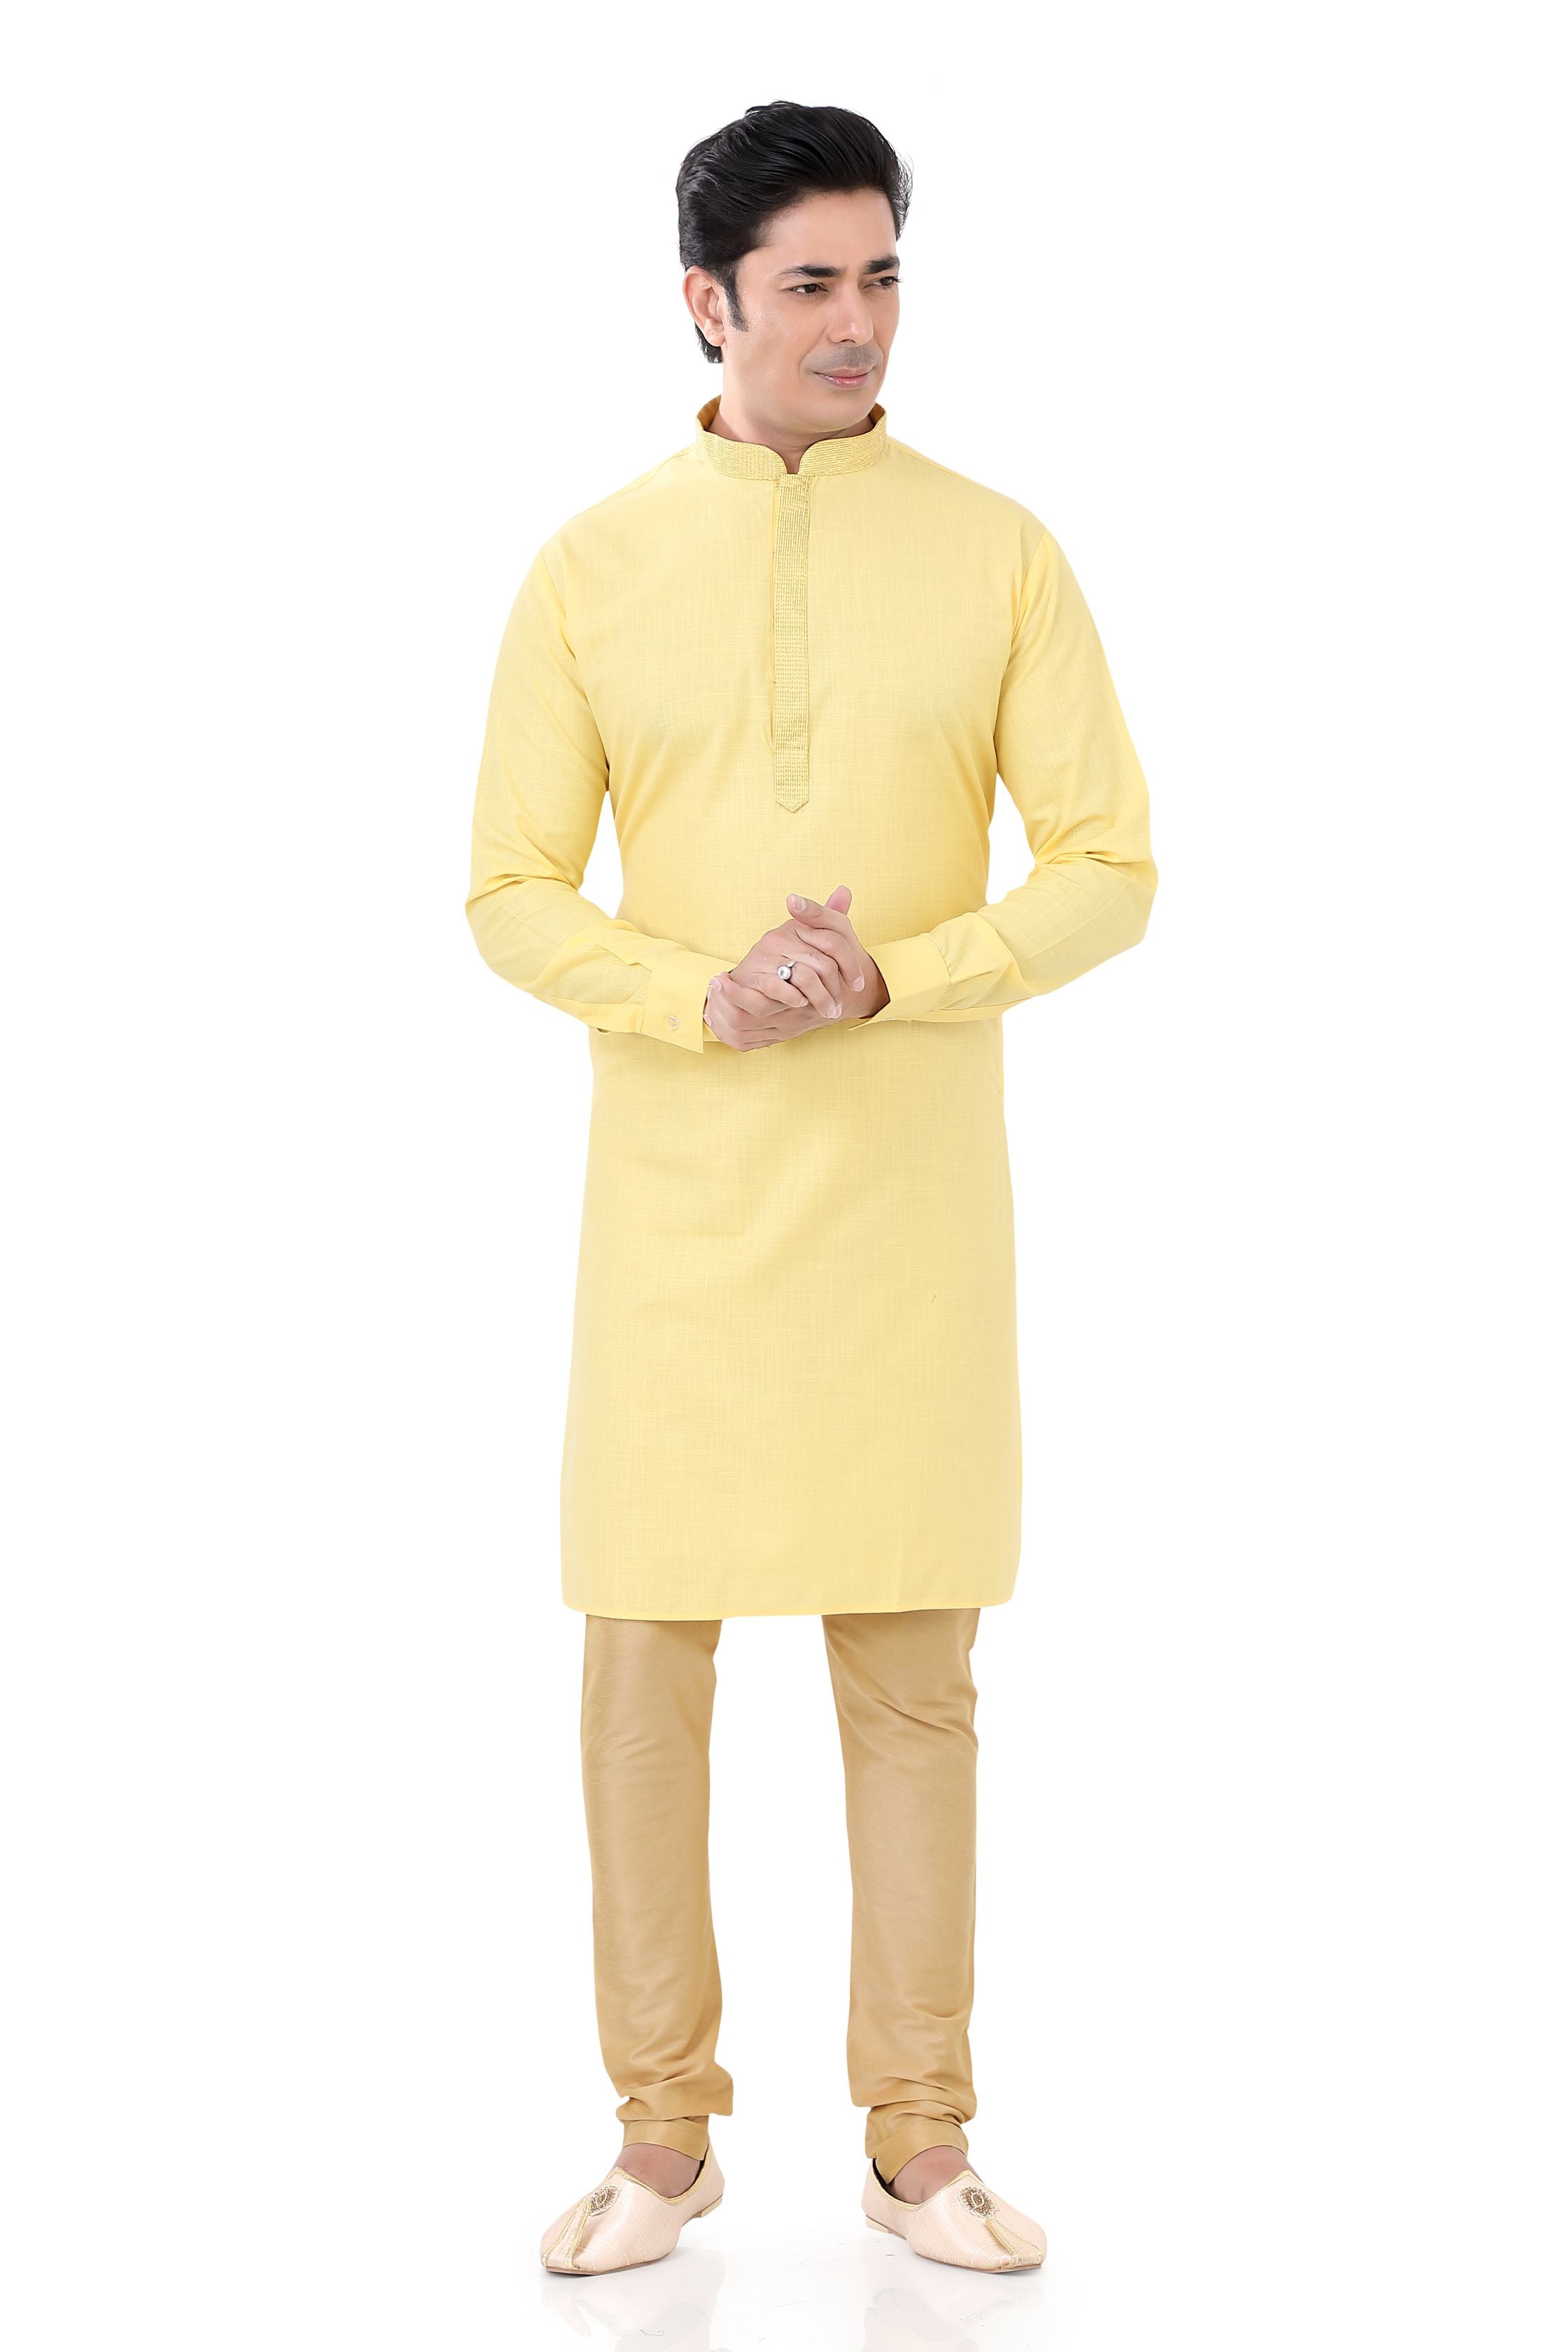 Cotton Anchor embroidery Kurta Pajama in Yellow Colour